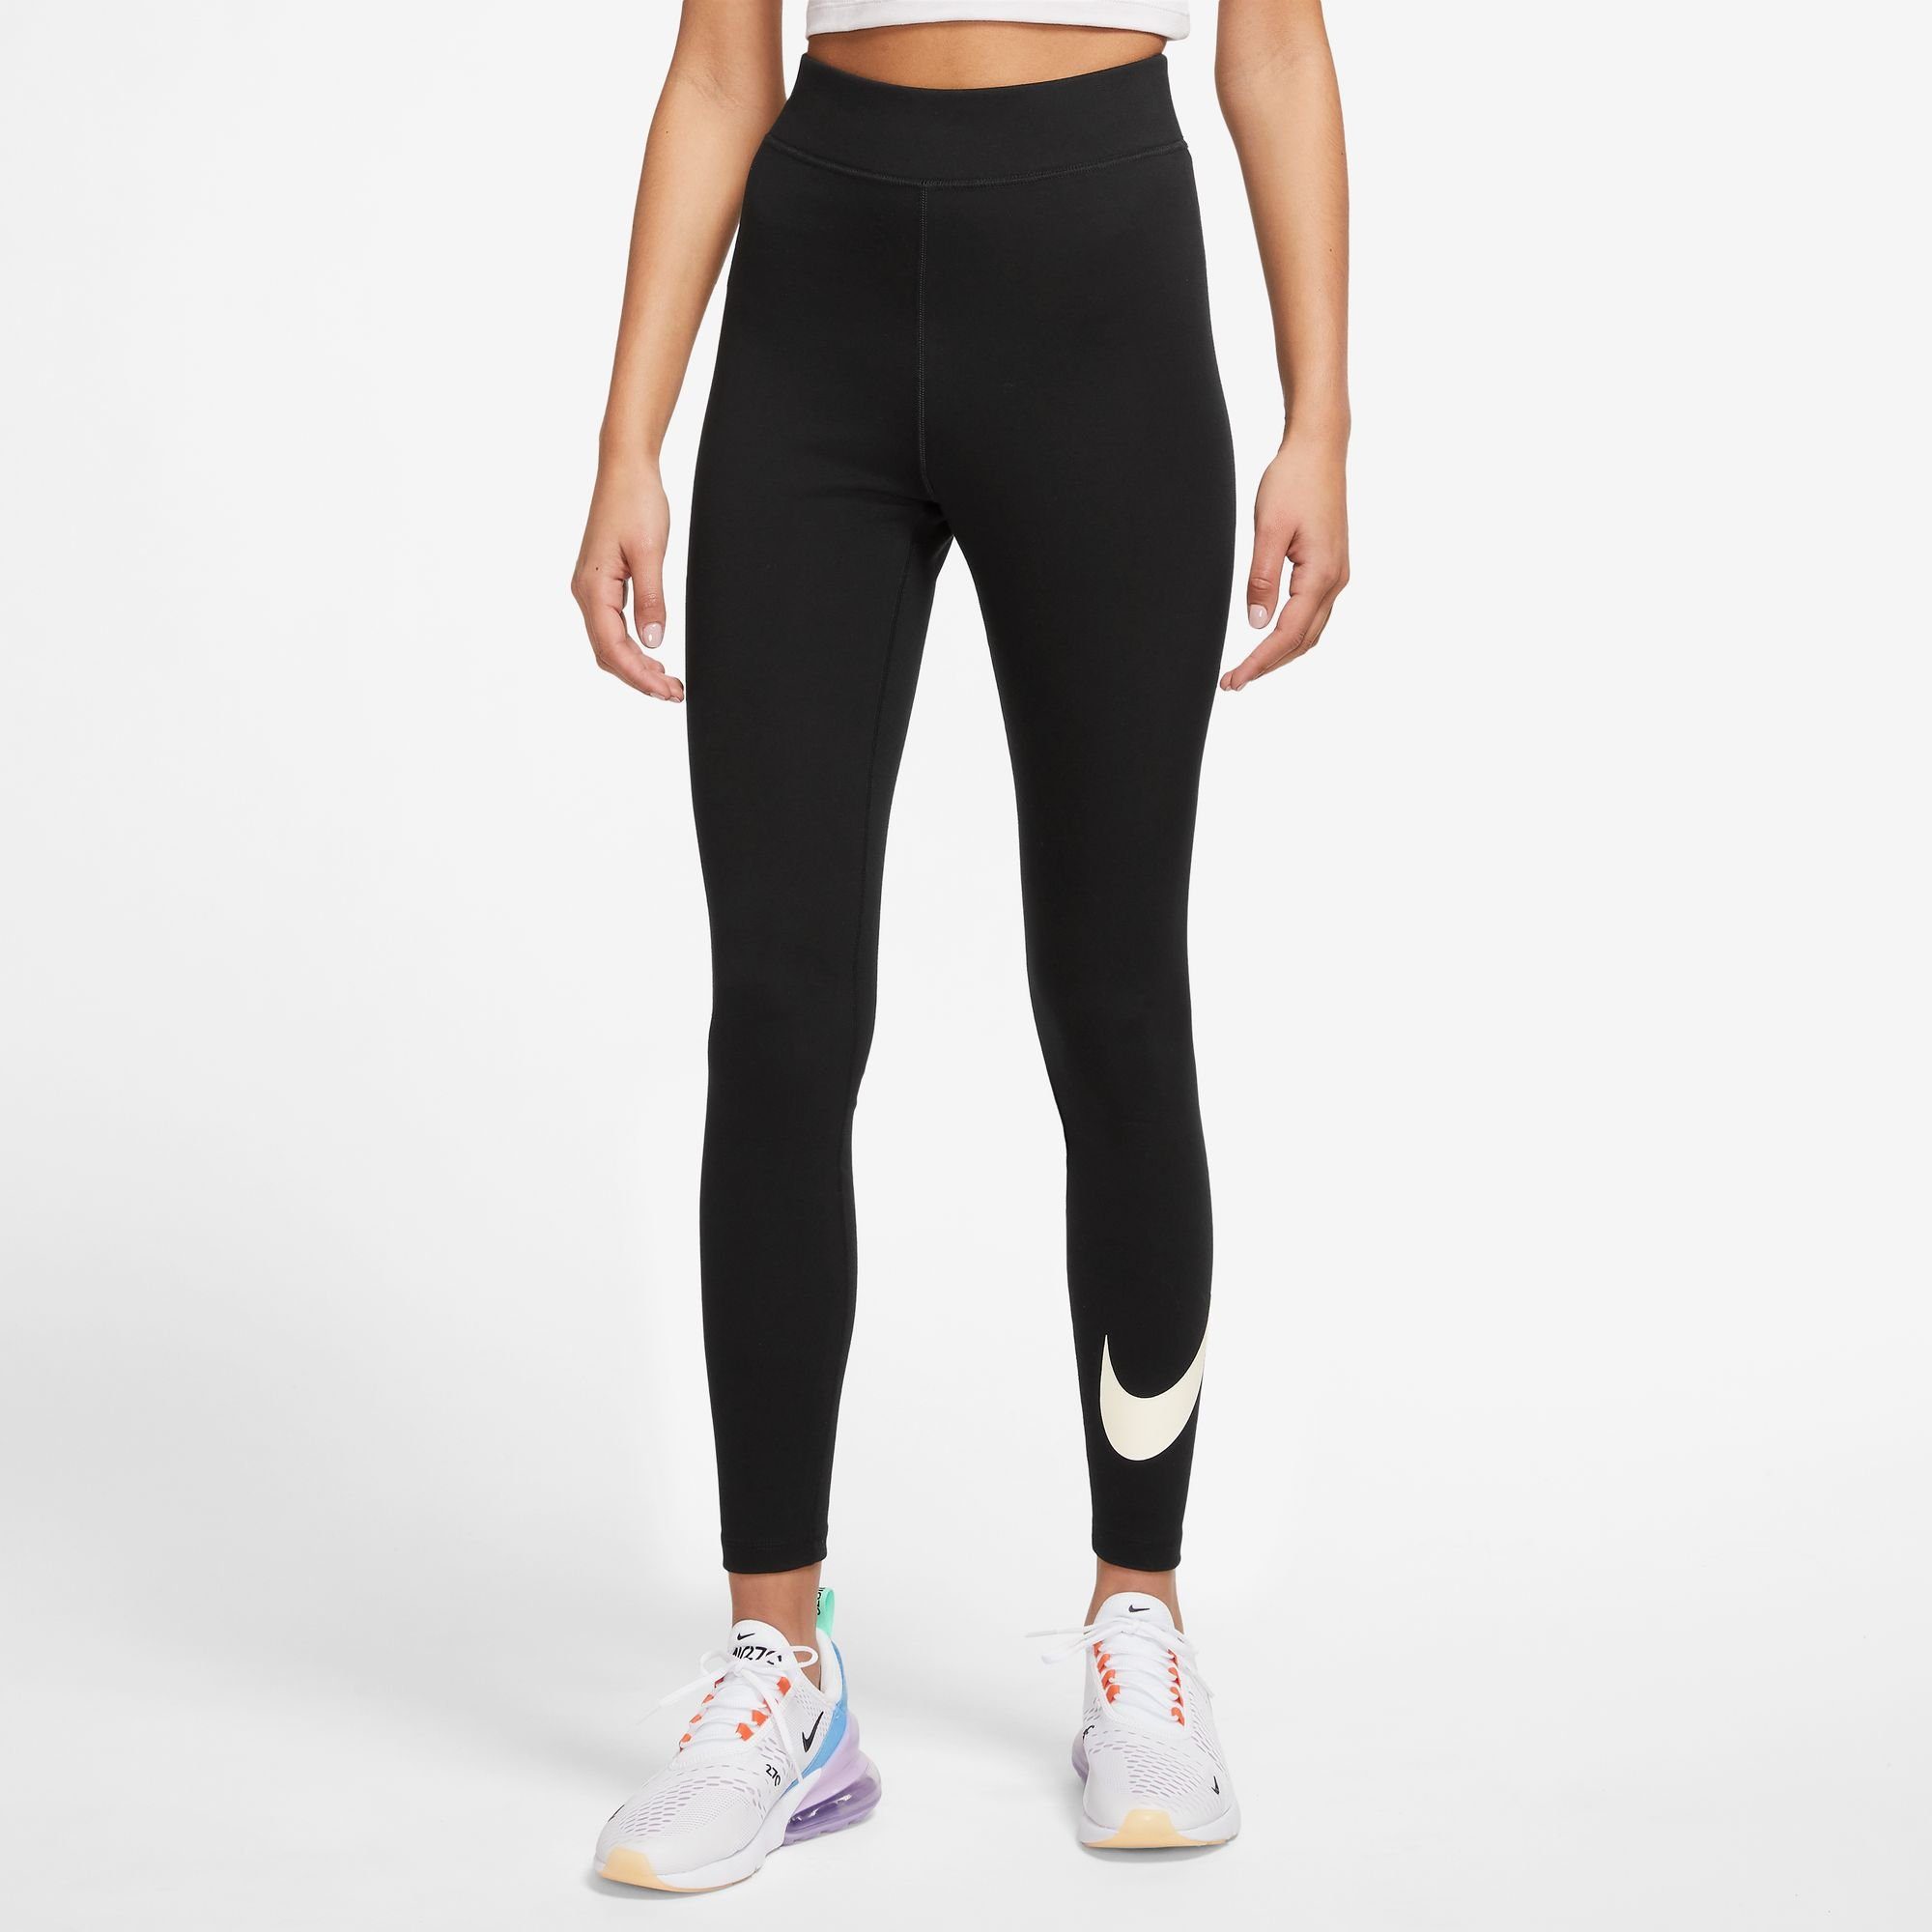 Nike Sportswear Leggings CLASSICS BLACK/SAIL WOMEN'S GRAPHIC HIGH-WAISTED LEGGINGS